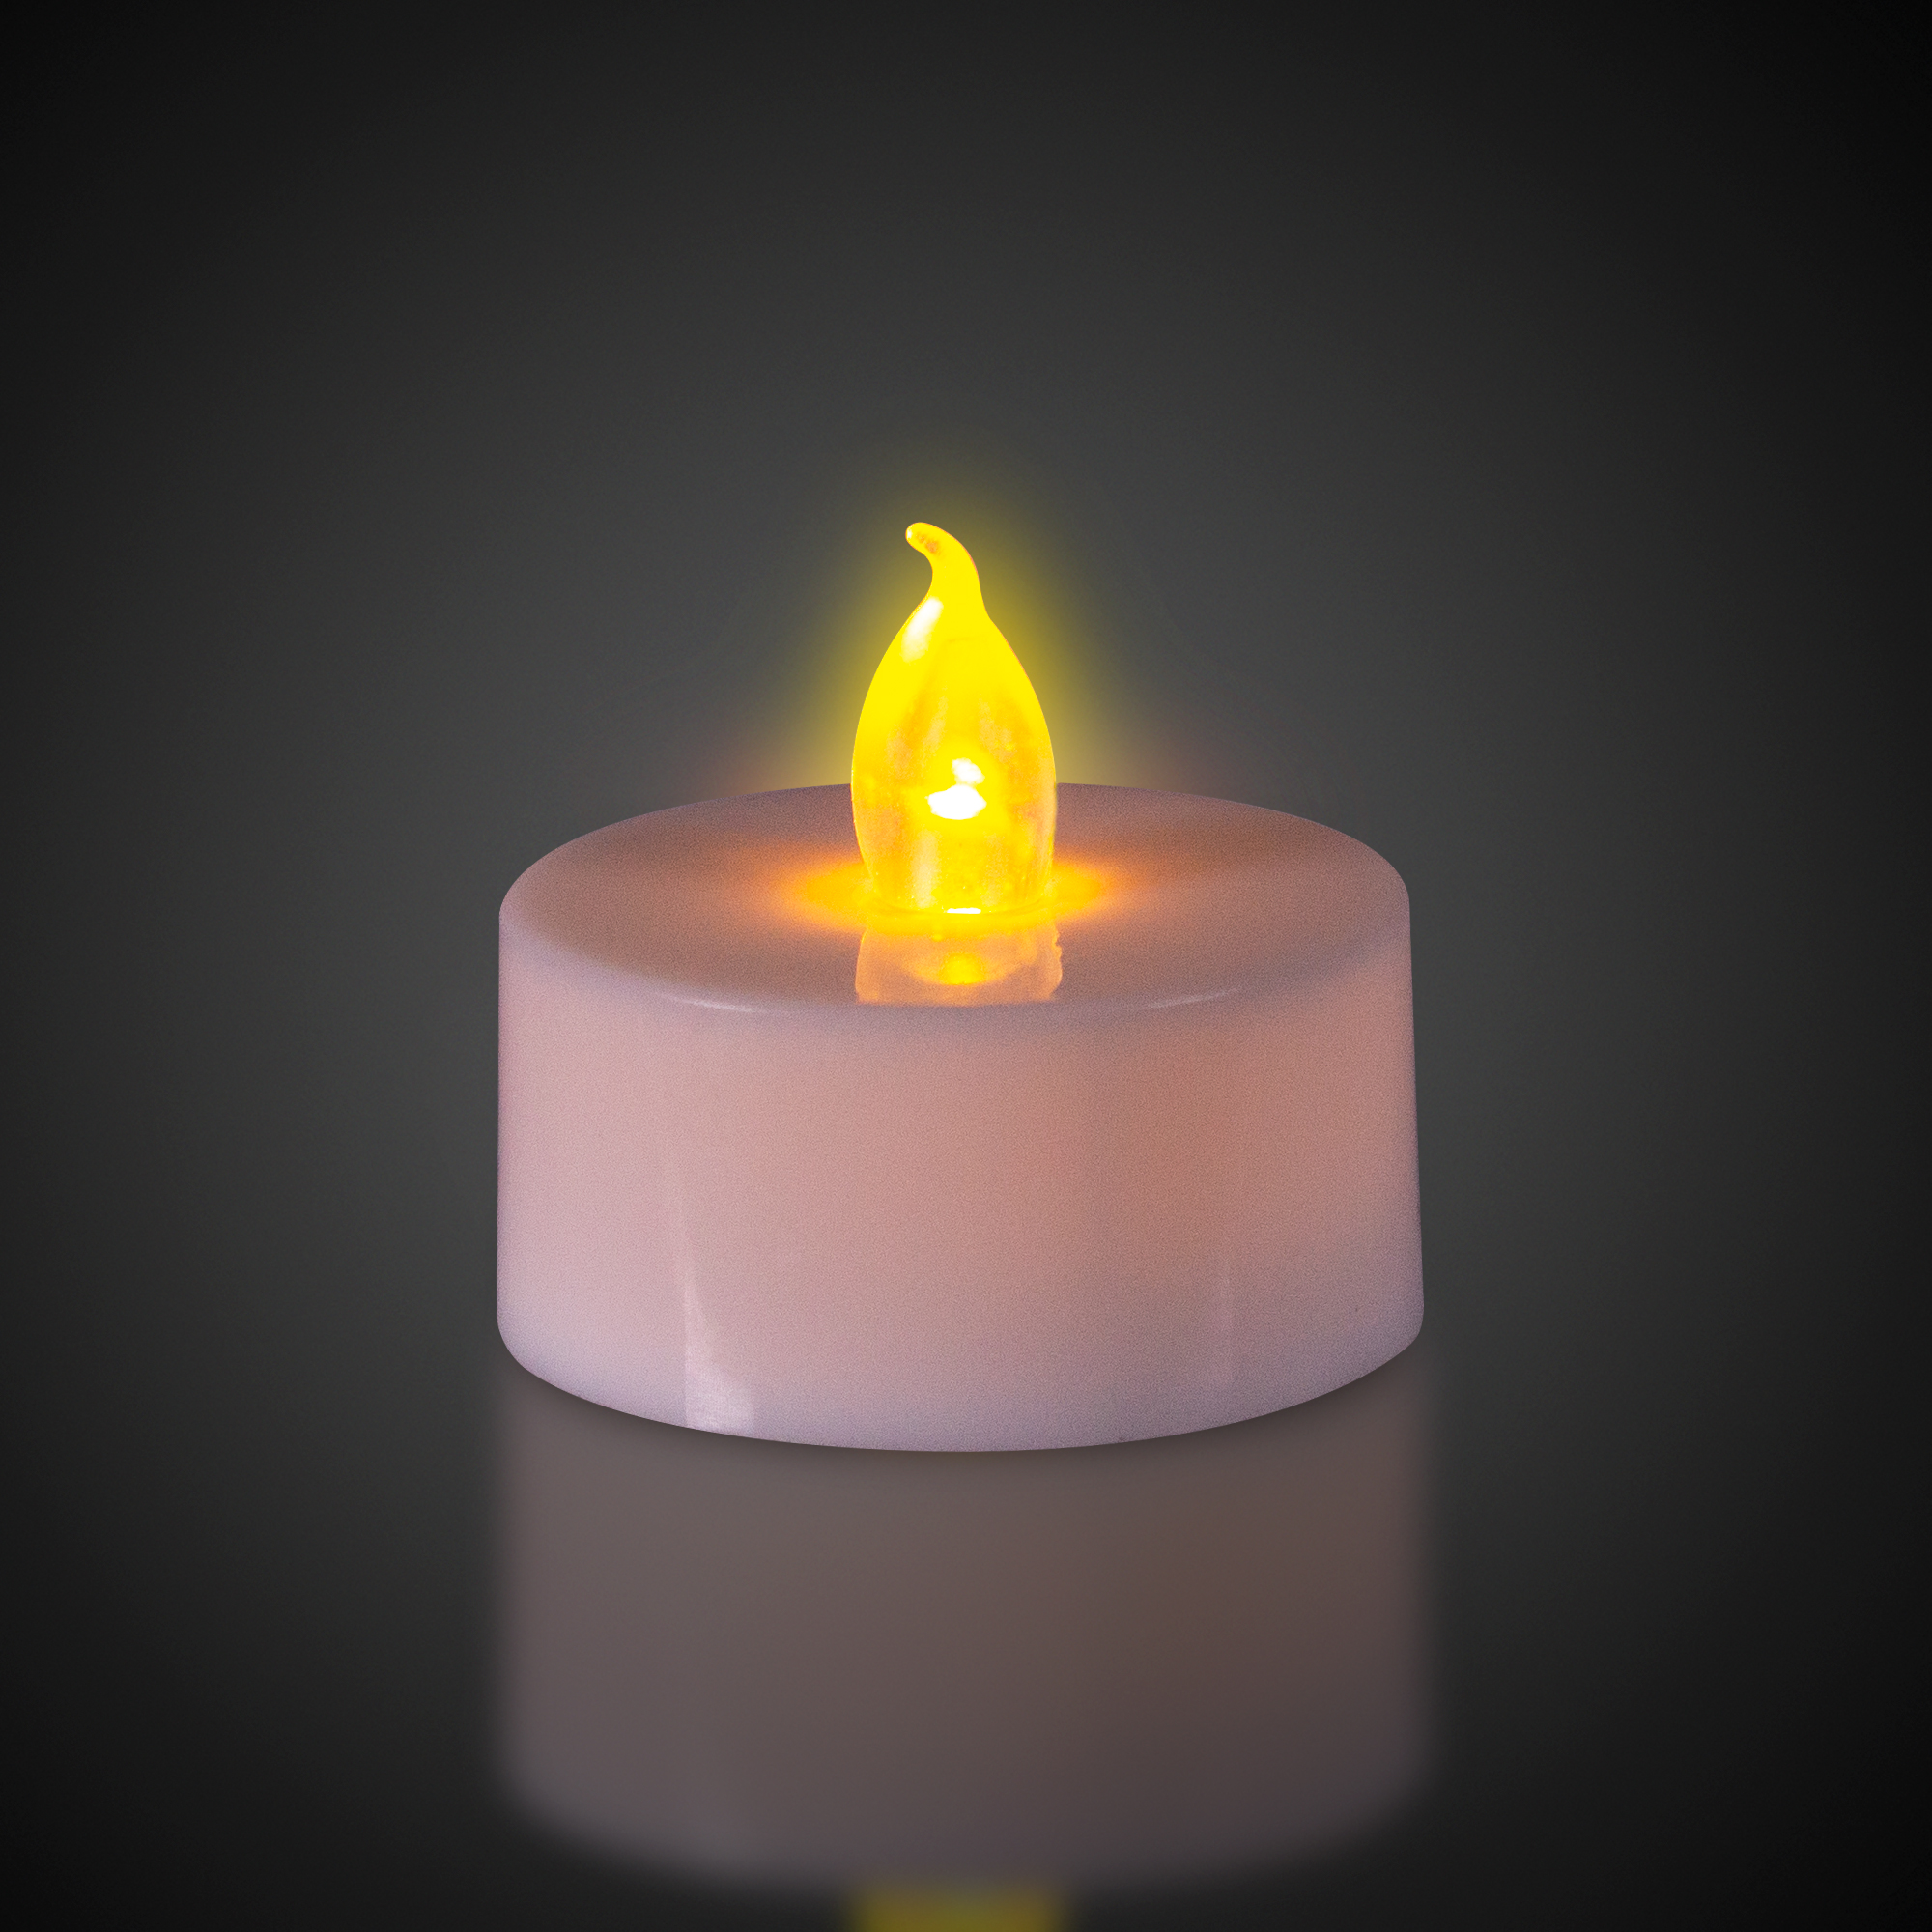 LED Flameless Tea Light Candles by Windy City Novelties